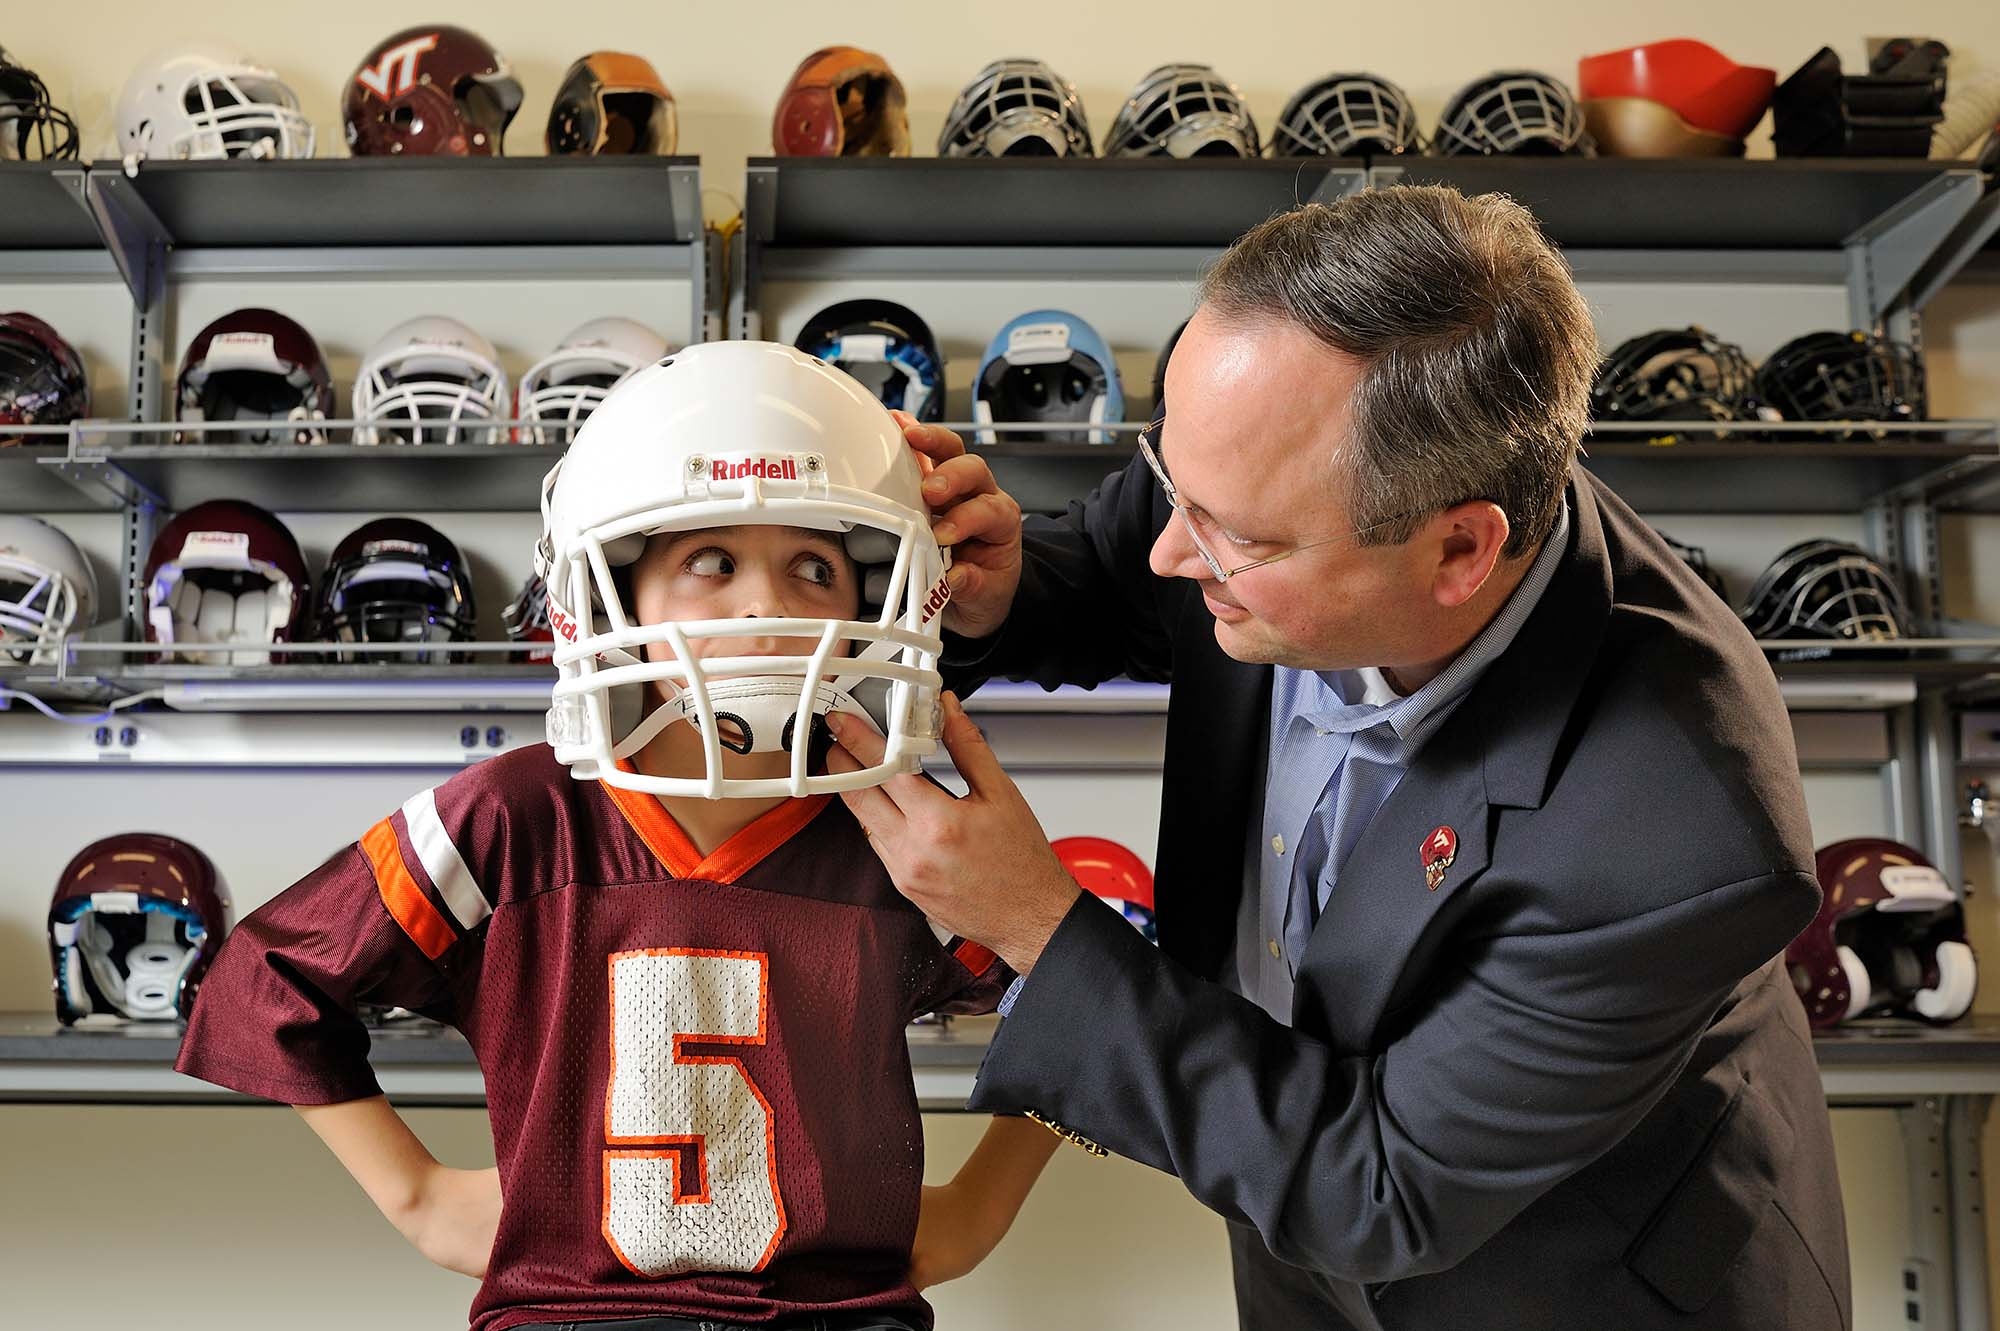 Researcher puts a football helmet on a child